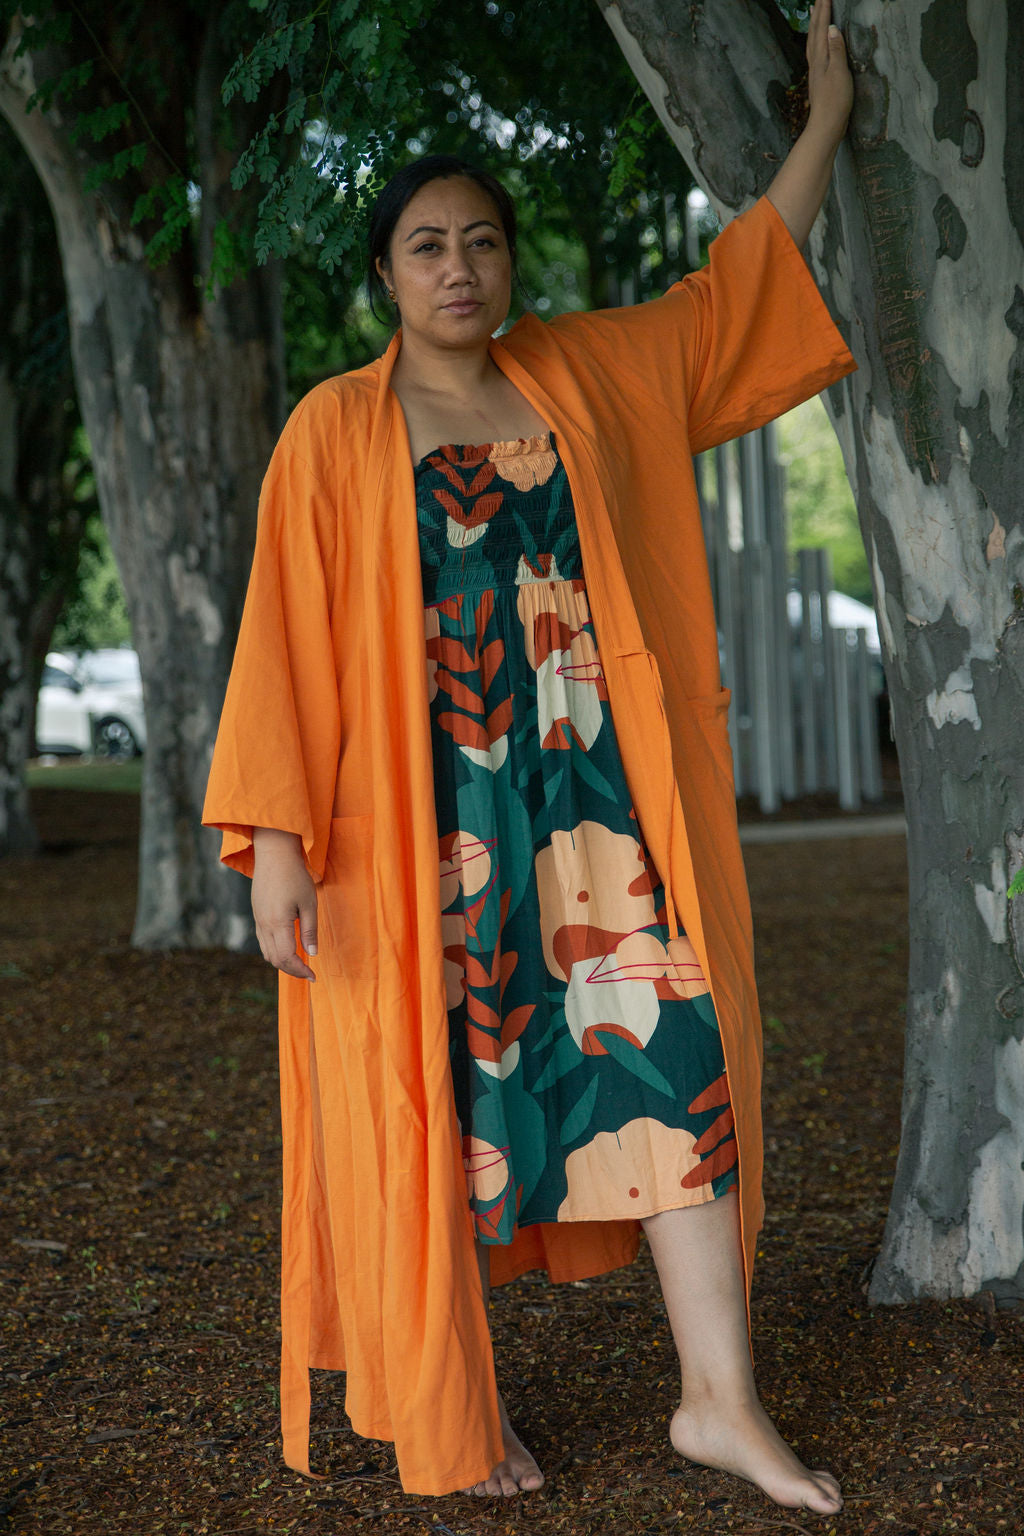 Adele Orange Cotton Robe